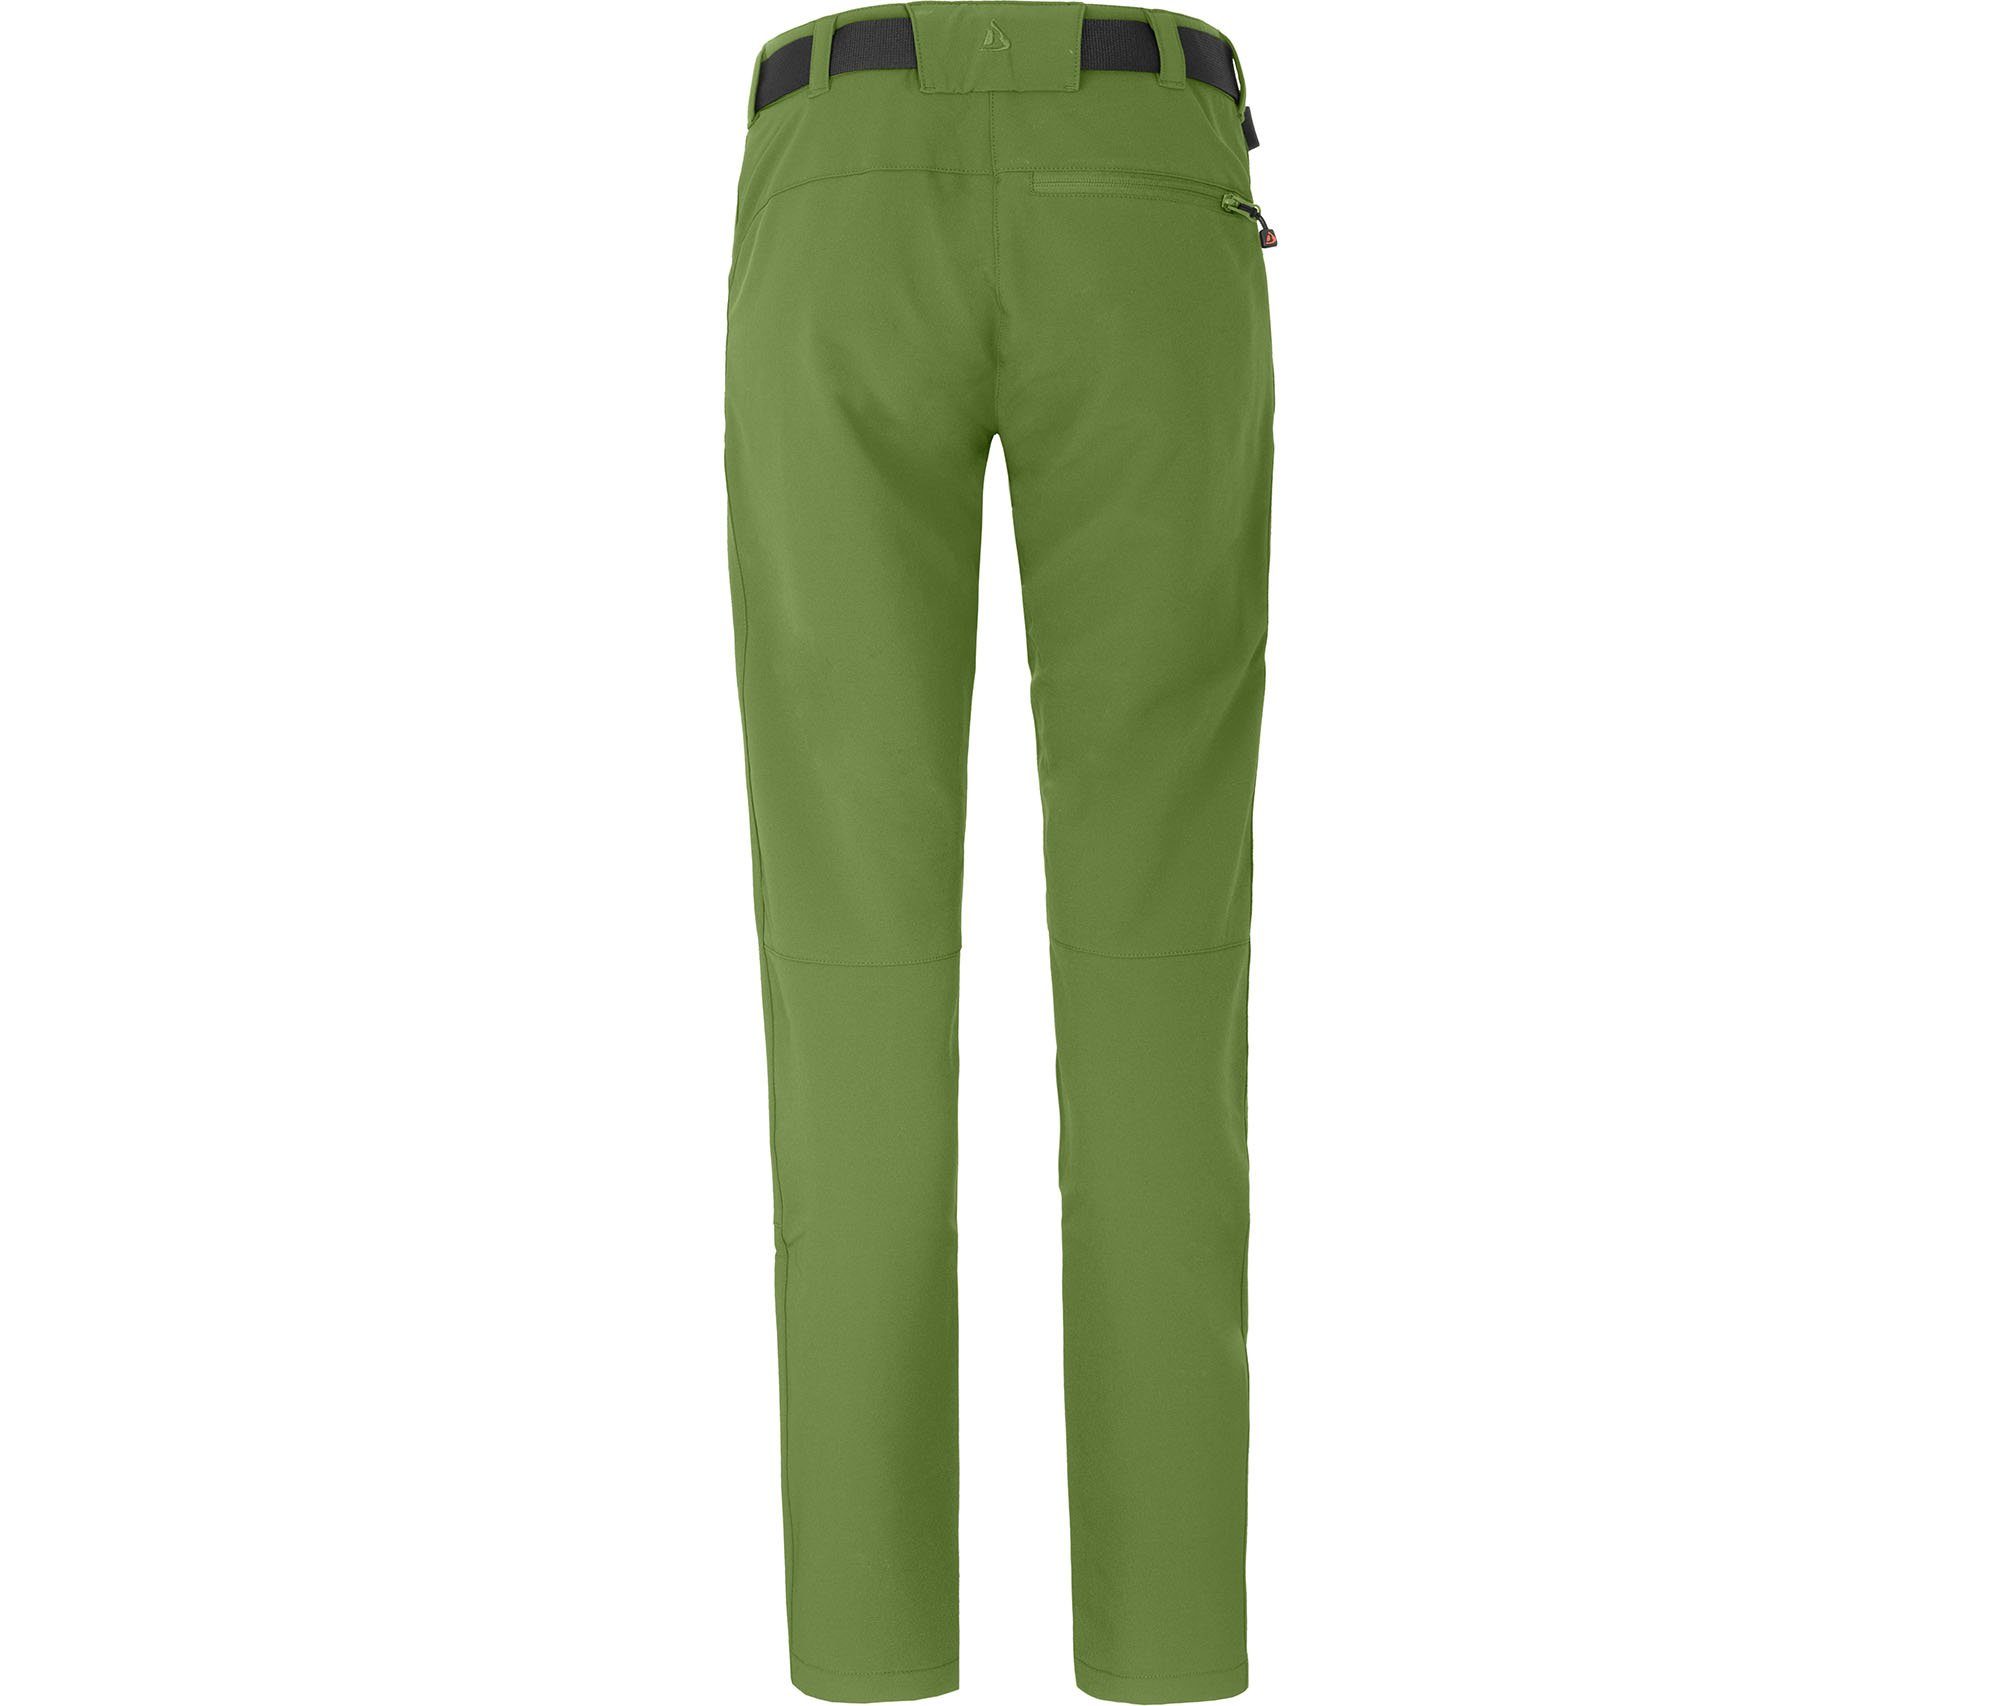 grün Winter-Wanderhose, KEITA Damen Kurzgrößen, Bergson Outdoorhose recycelt, warm,